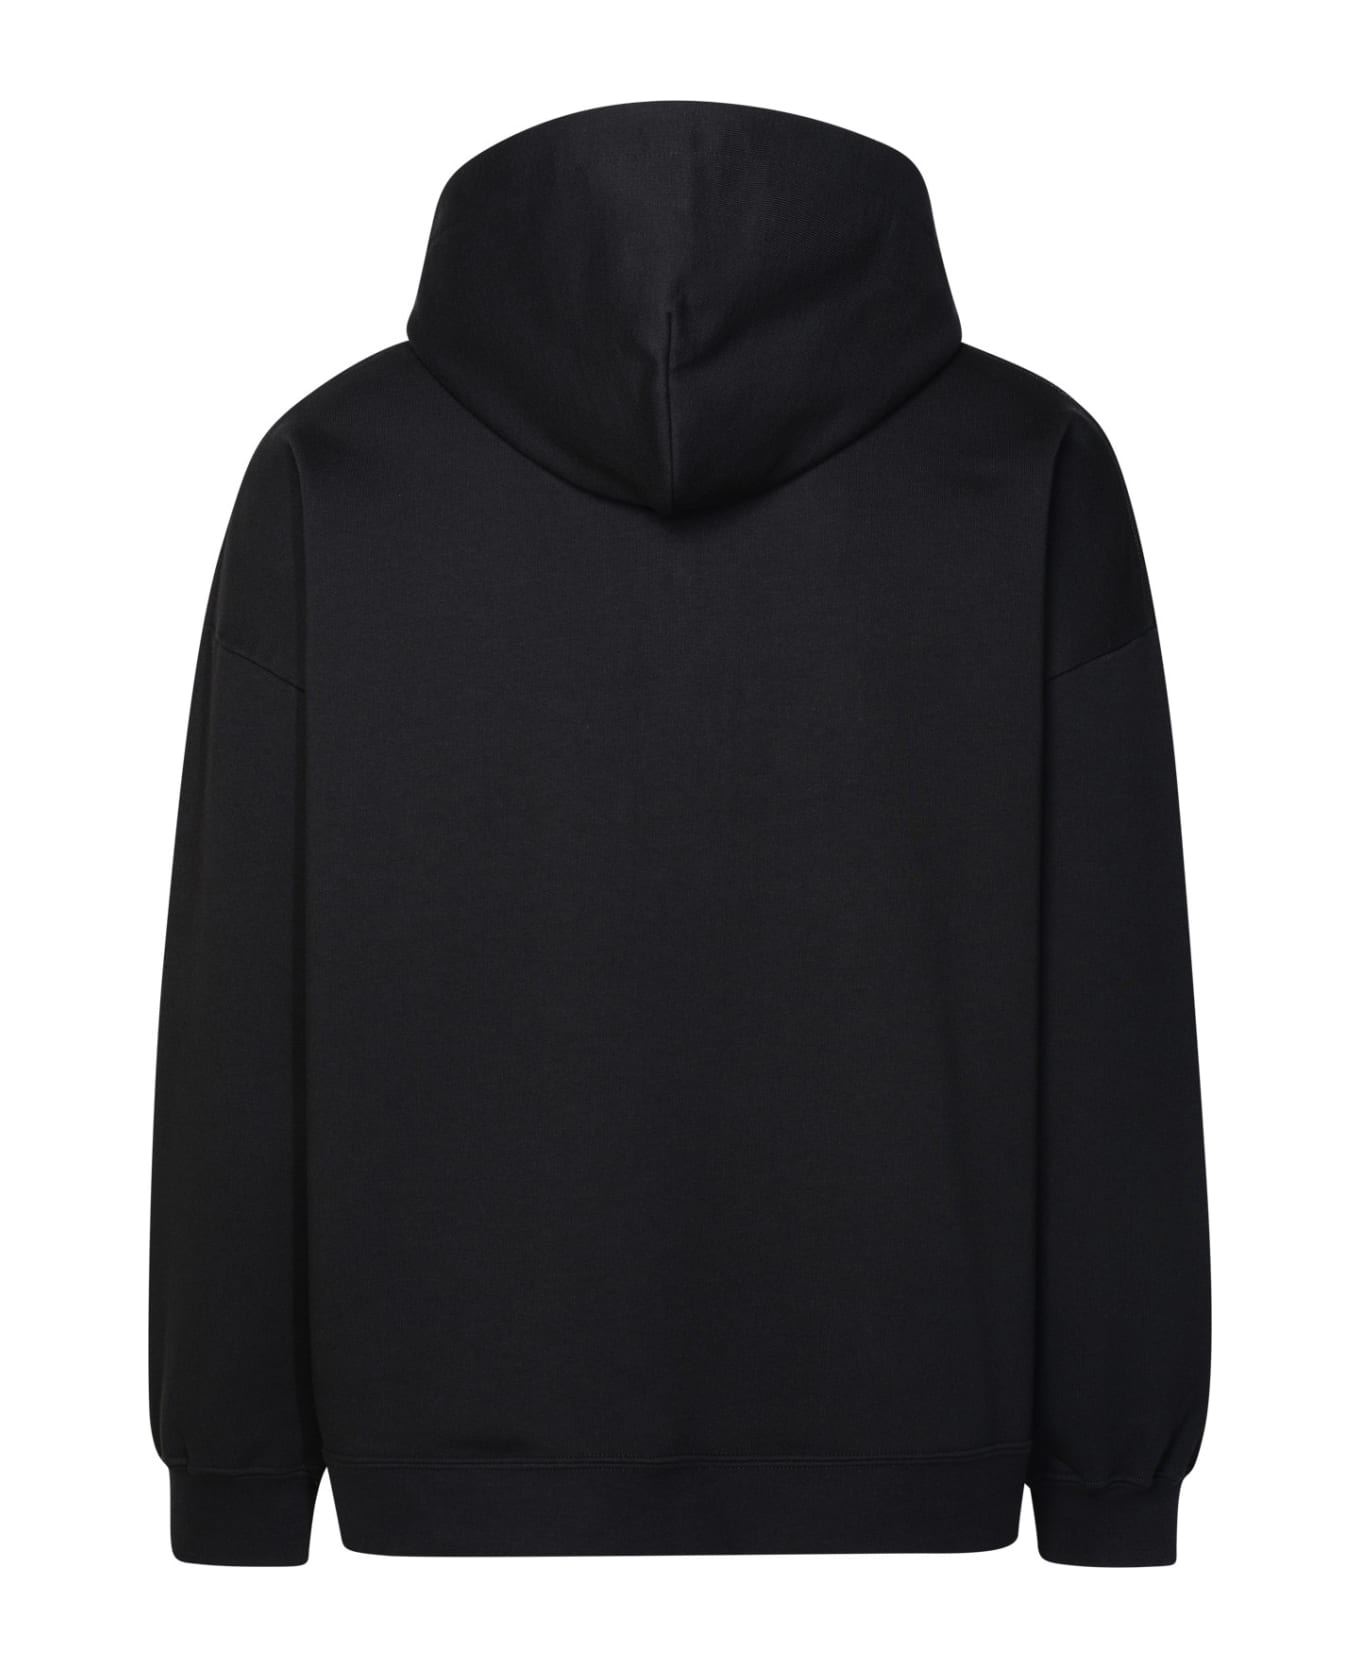 GCDS Black Cotton Sweatshirt - Black